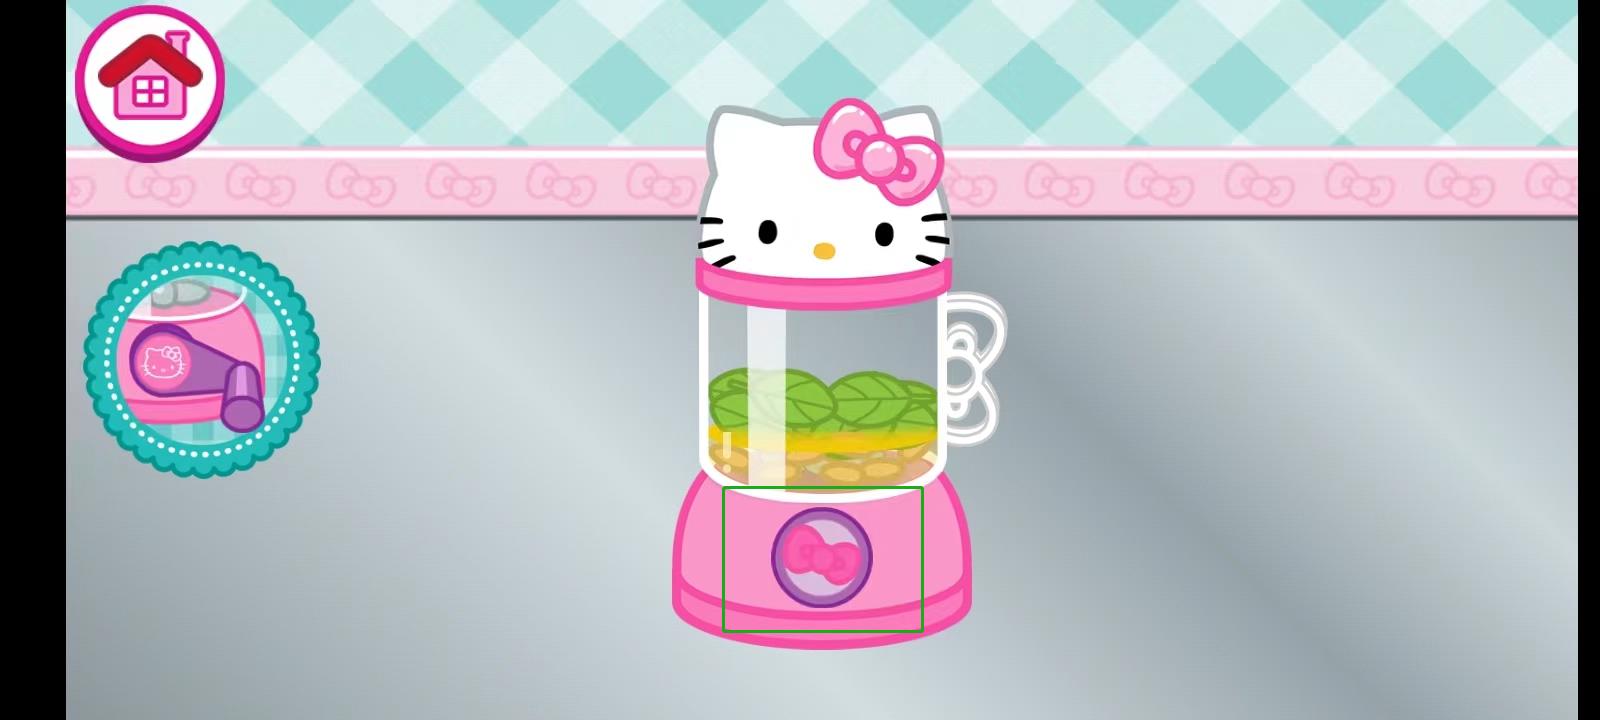 lunchbox凯蒂猫便当游戏怎么玩